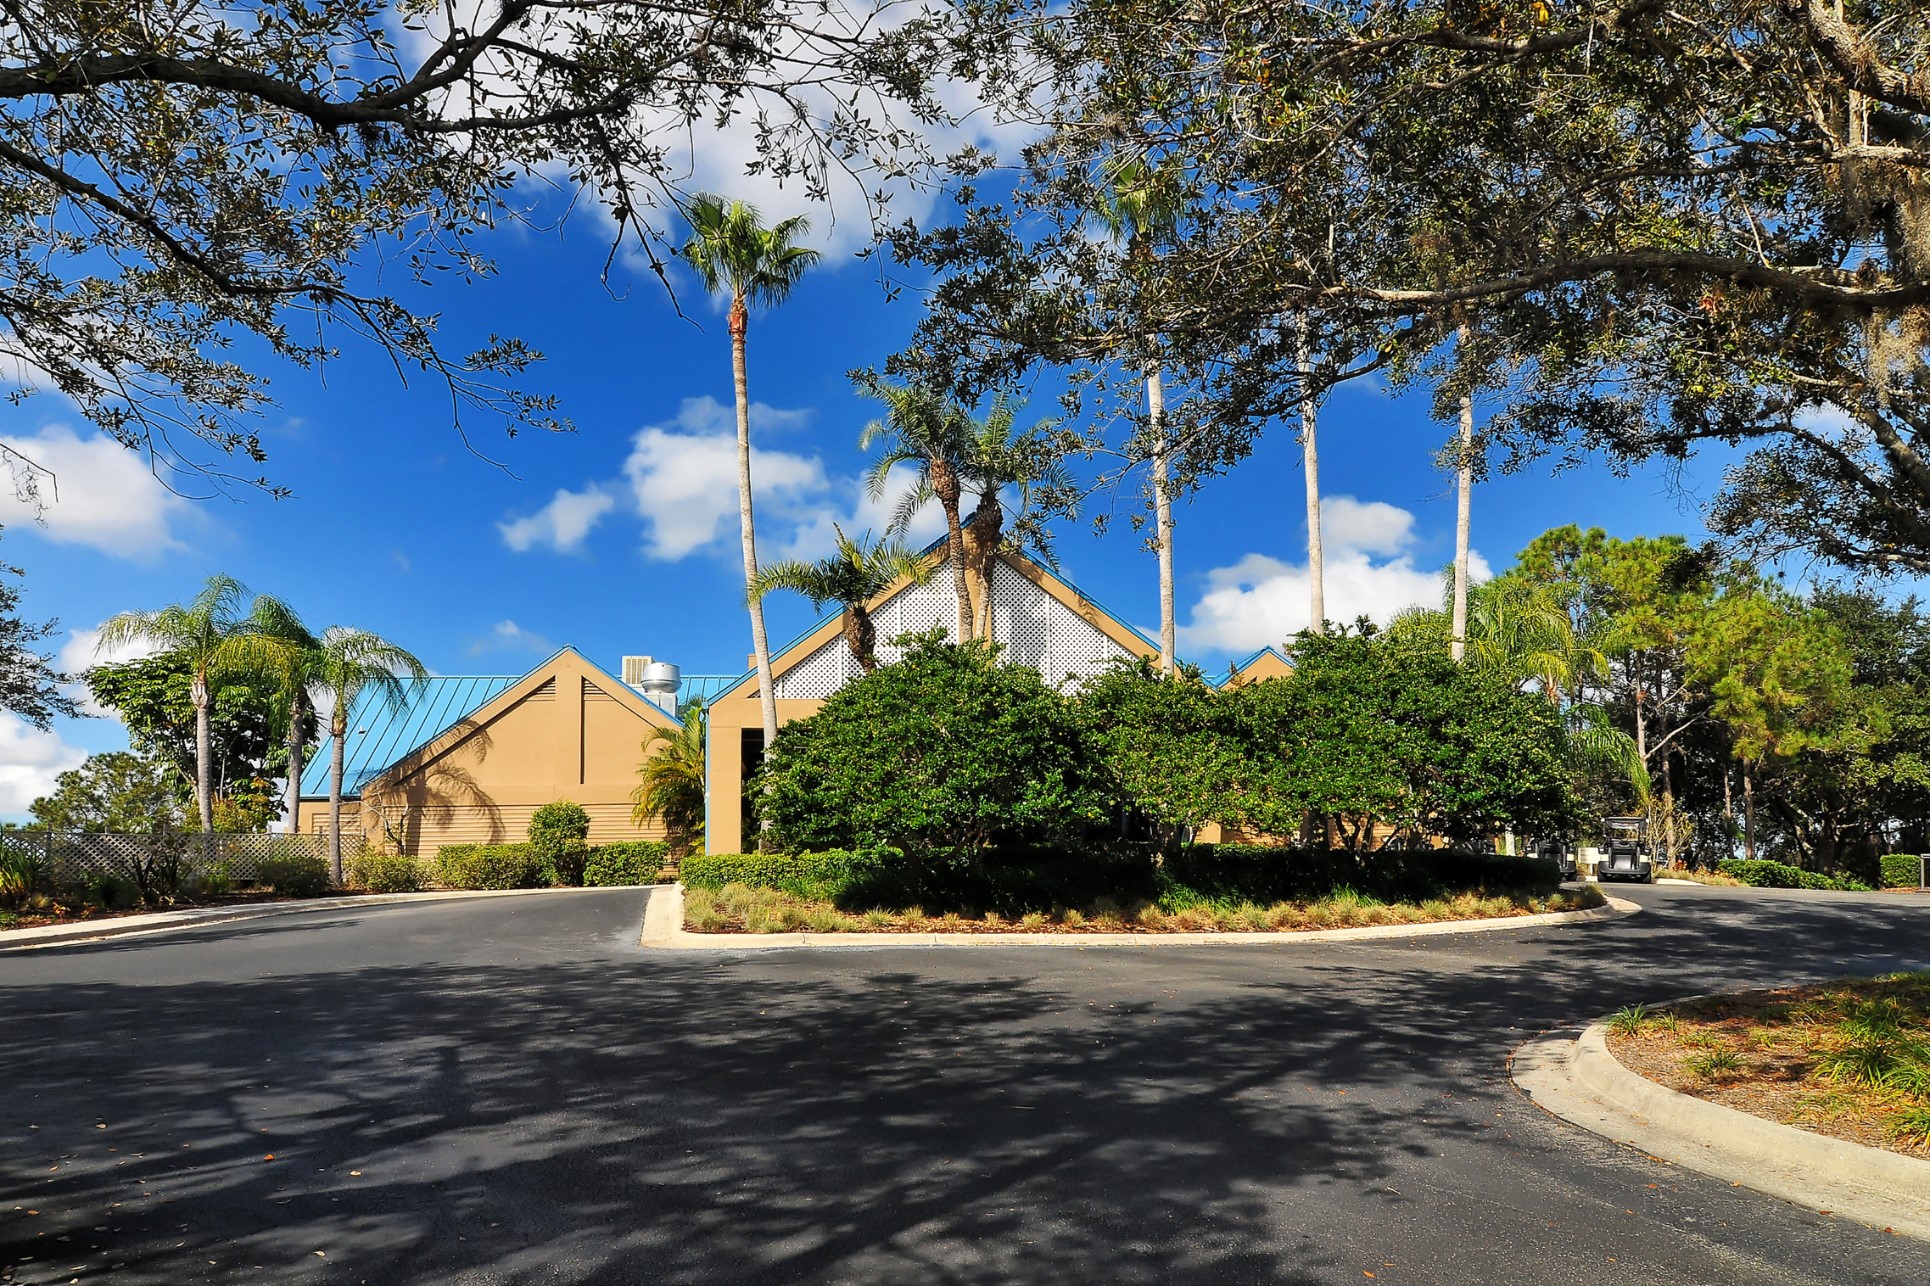 River Club Homes & Real Estate For Sale in Bradenton, Florida.